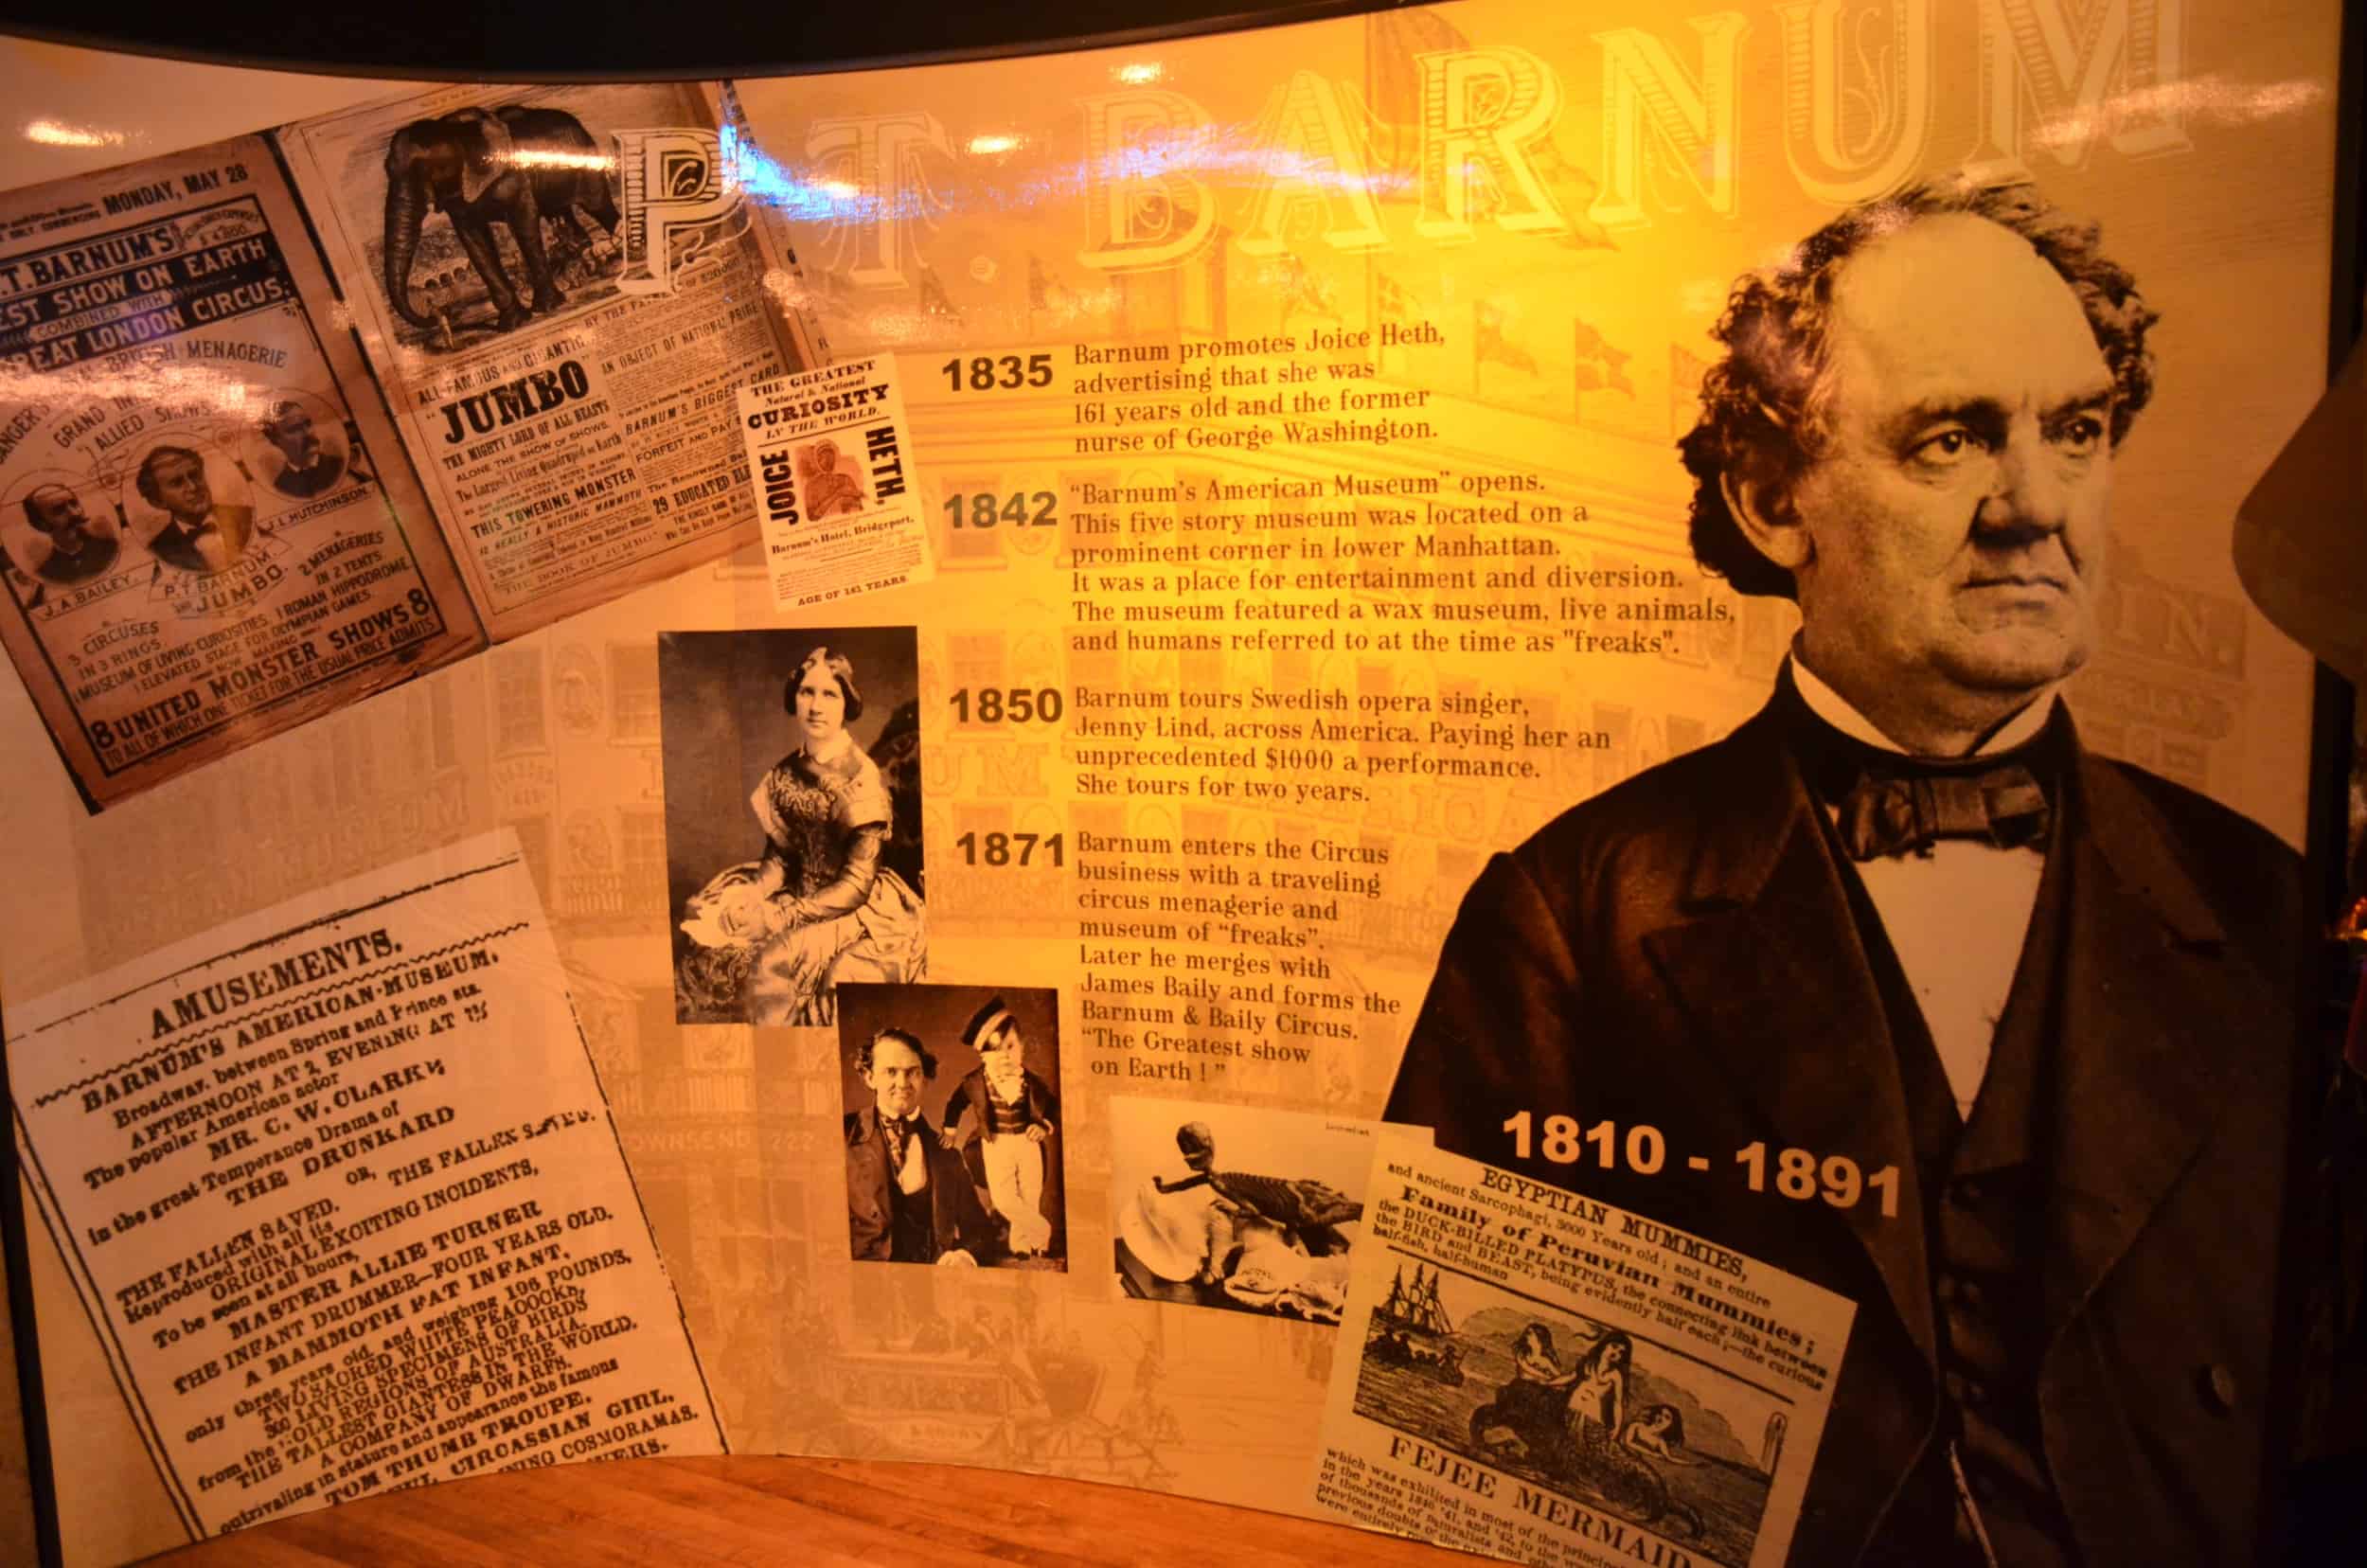 P. T. Barnum display at the Buckhorn Museum in San Antonio, Texas